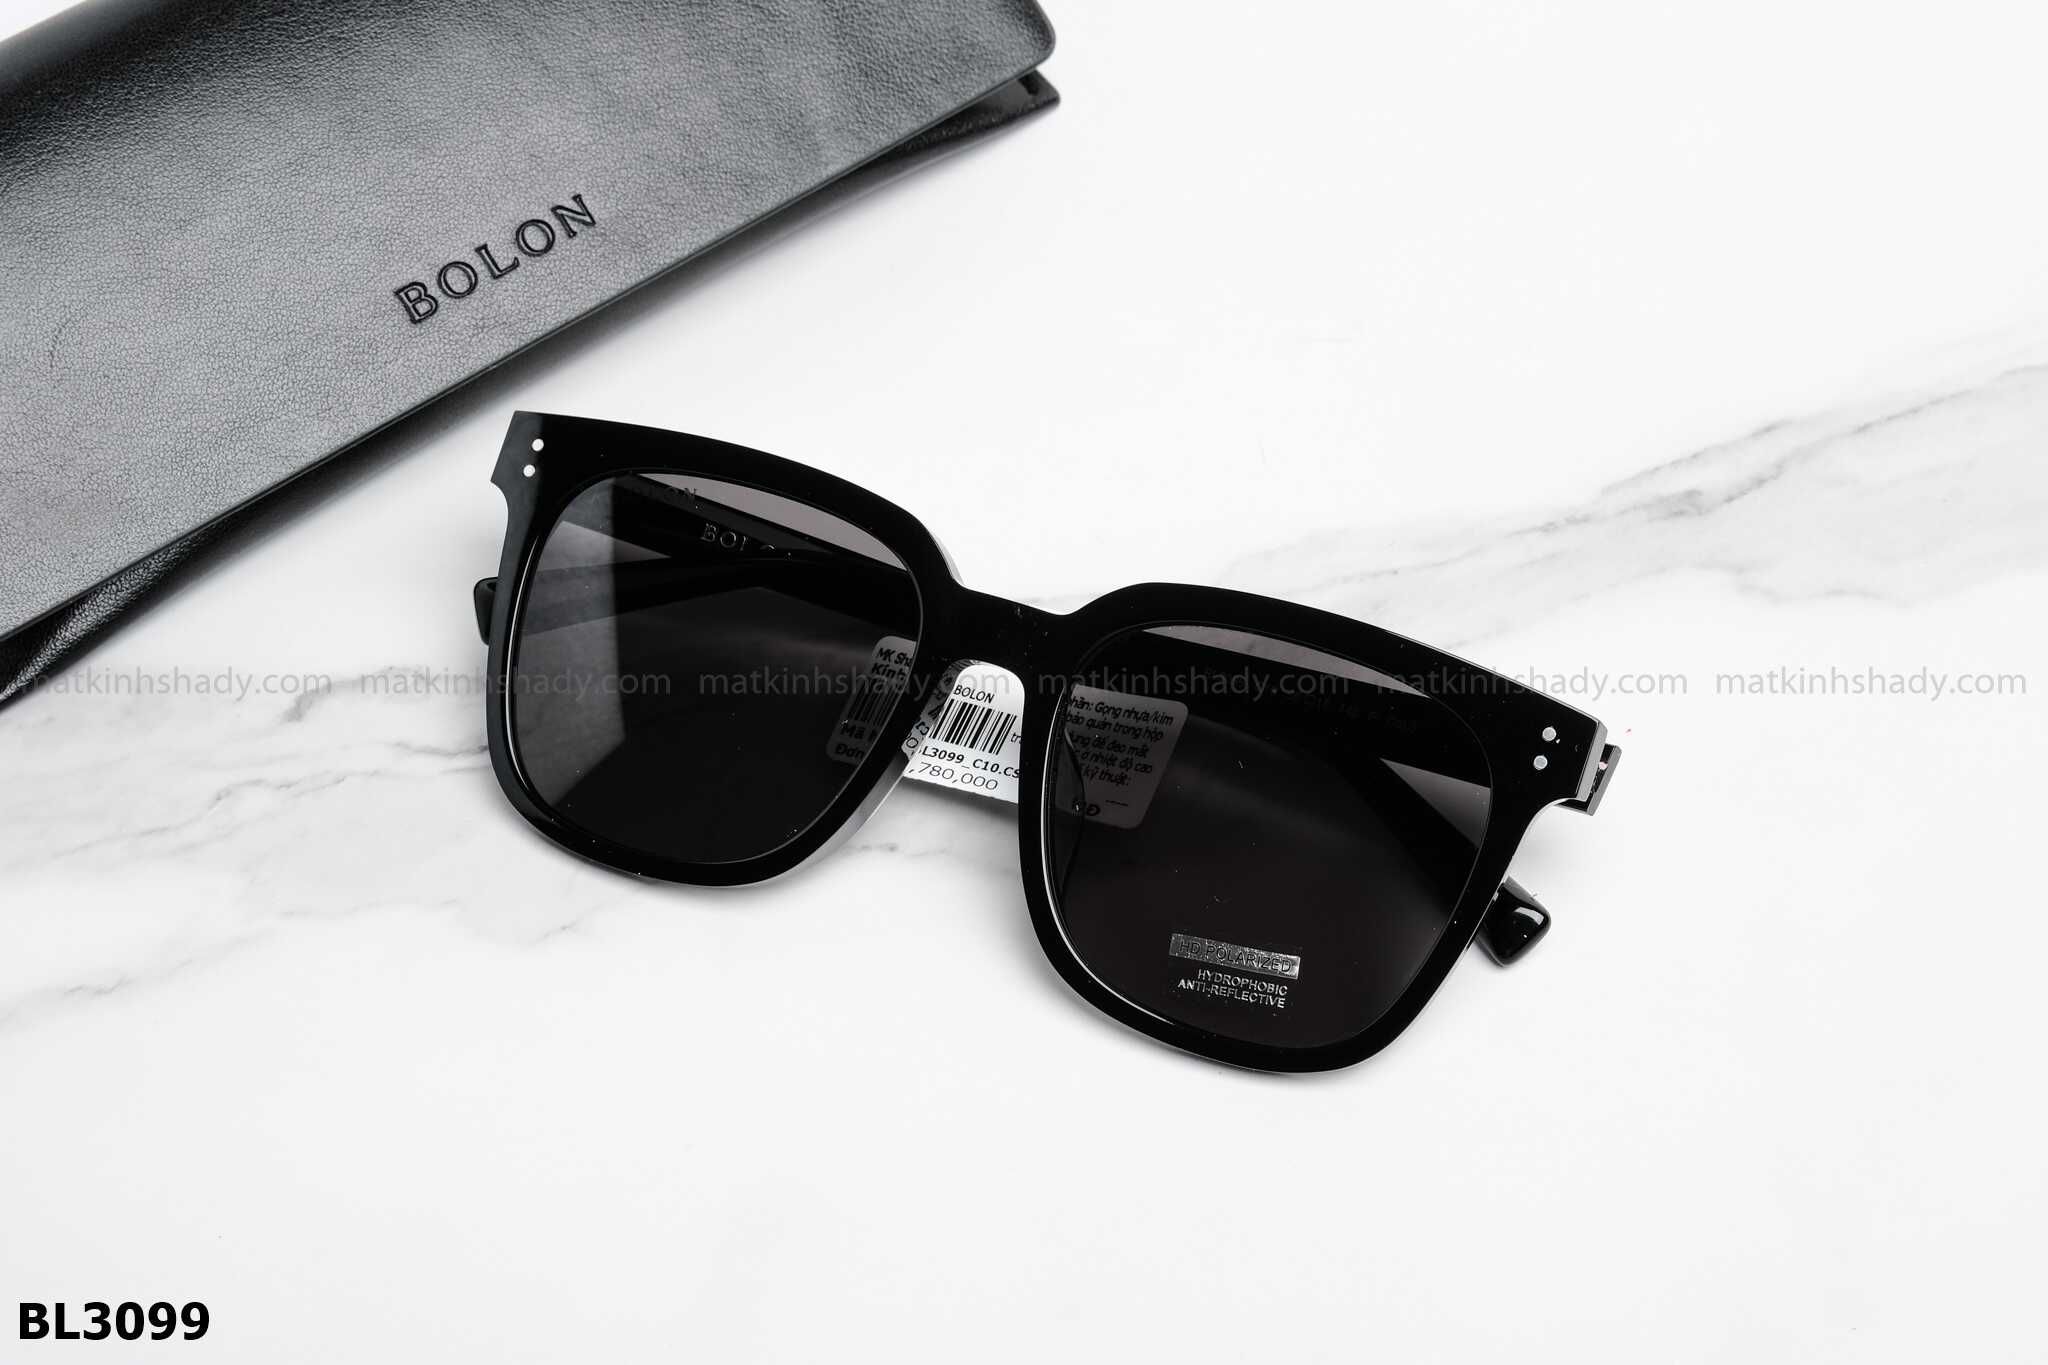  Bolon Eyewear - Sunglasses - BL3099 